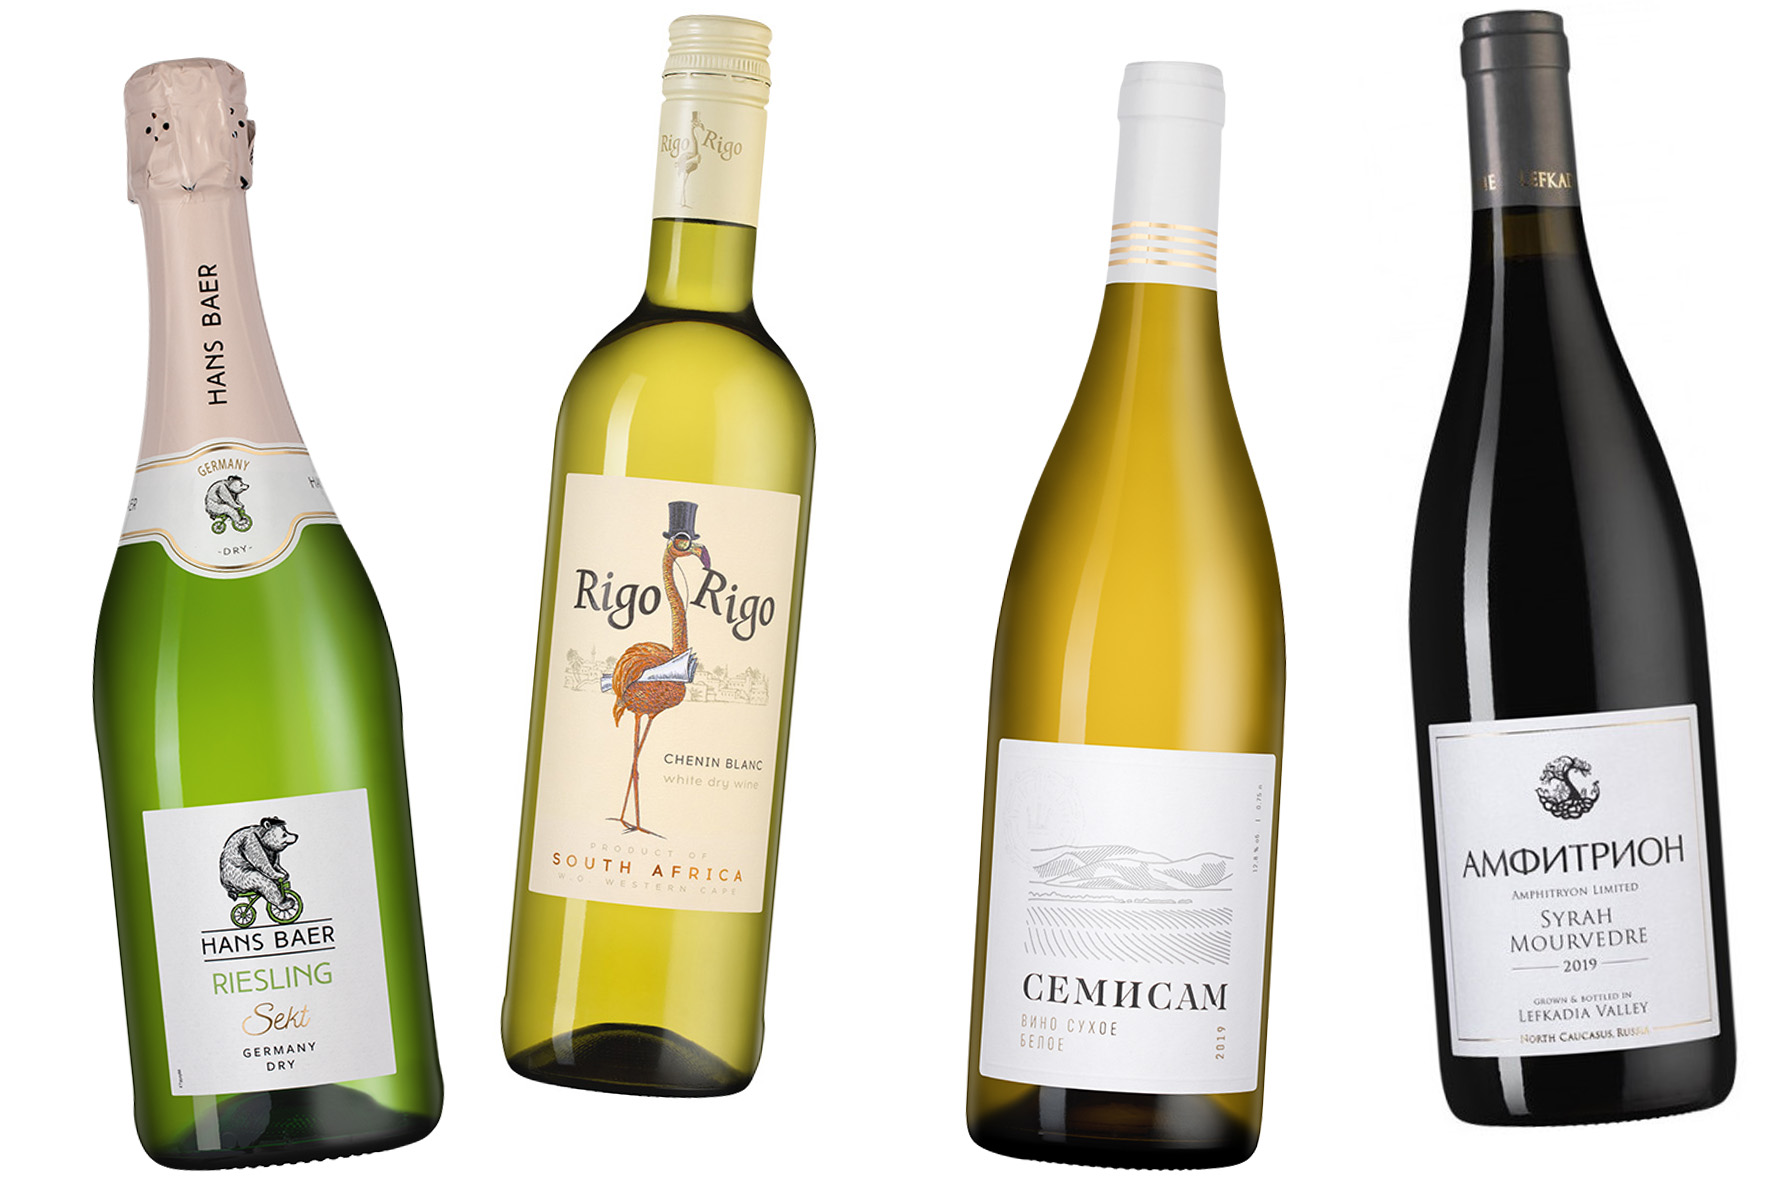 Слева направо: Игристое вино Hans Baer Riesling Sekt; Rigo Rigo Chenin Blanc; Семисам Белое, Шумринка; Амфитрион Лимитед Сира/Мурведр